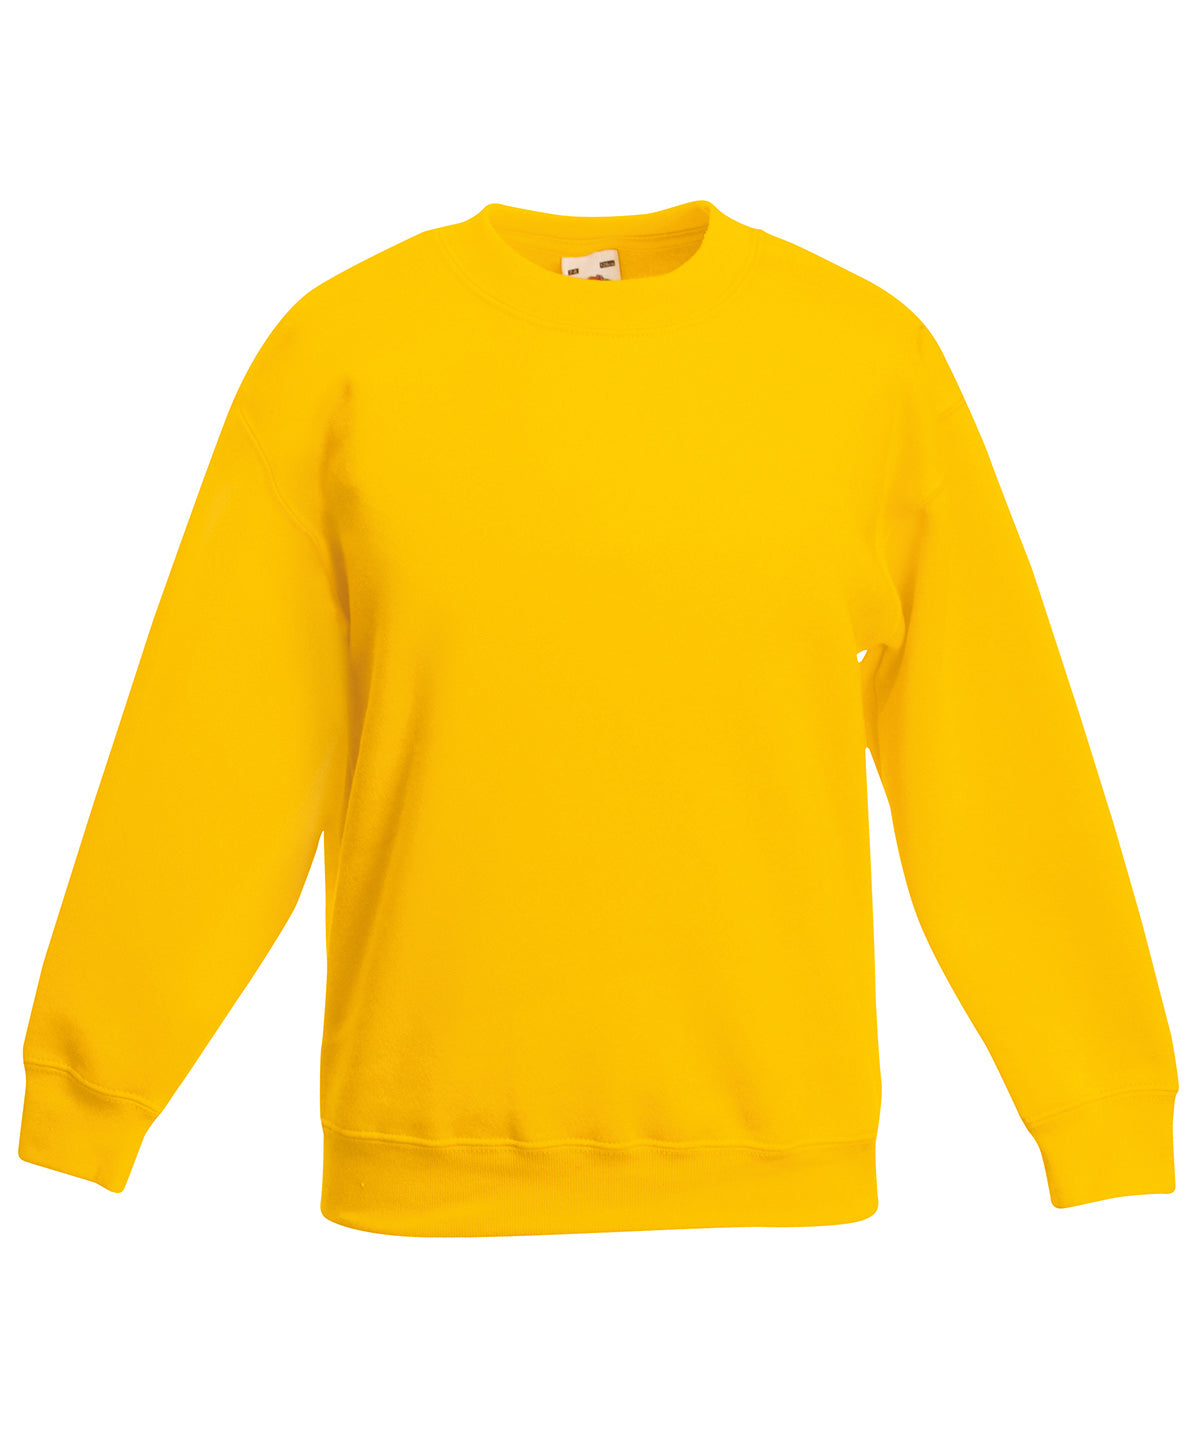 Personalised Sweatshirts - Bottle Fruit of the Loom Kids classic set-in sweatshirt